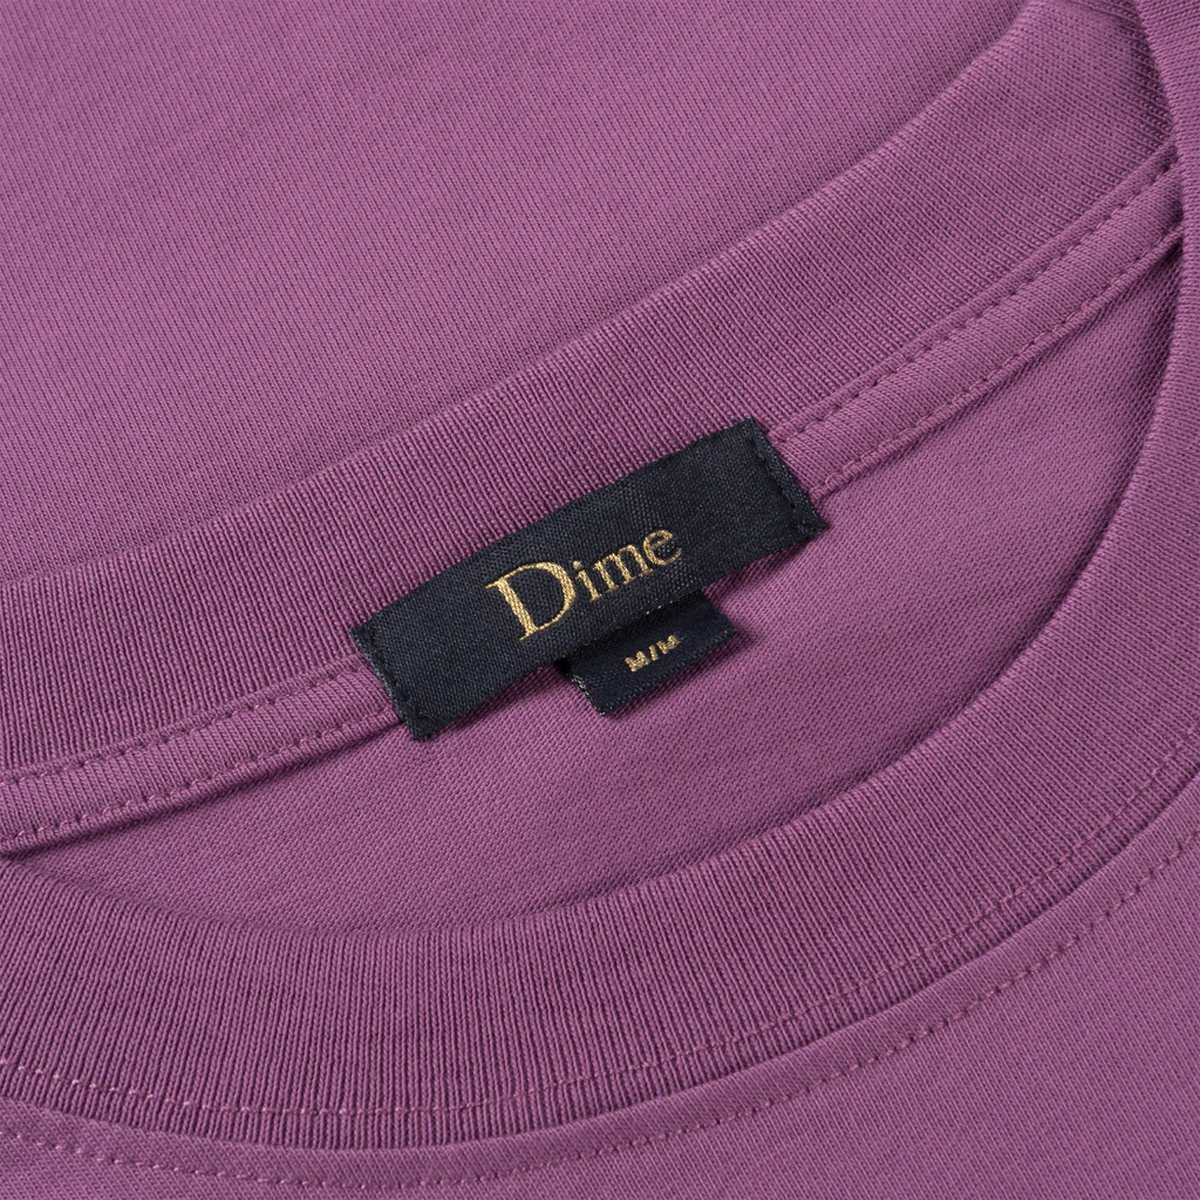 Dime Collage T-Shirt - Violet